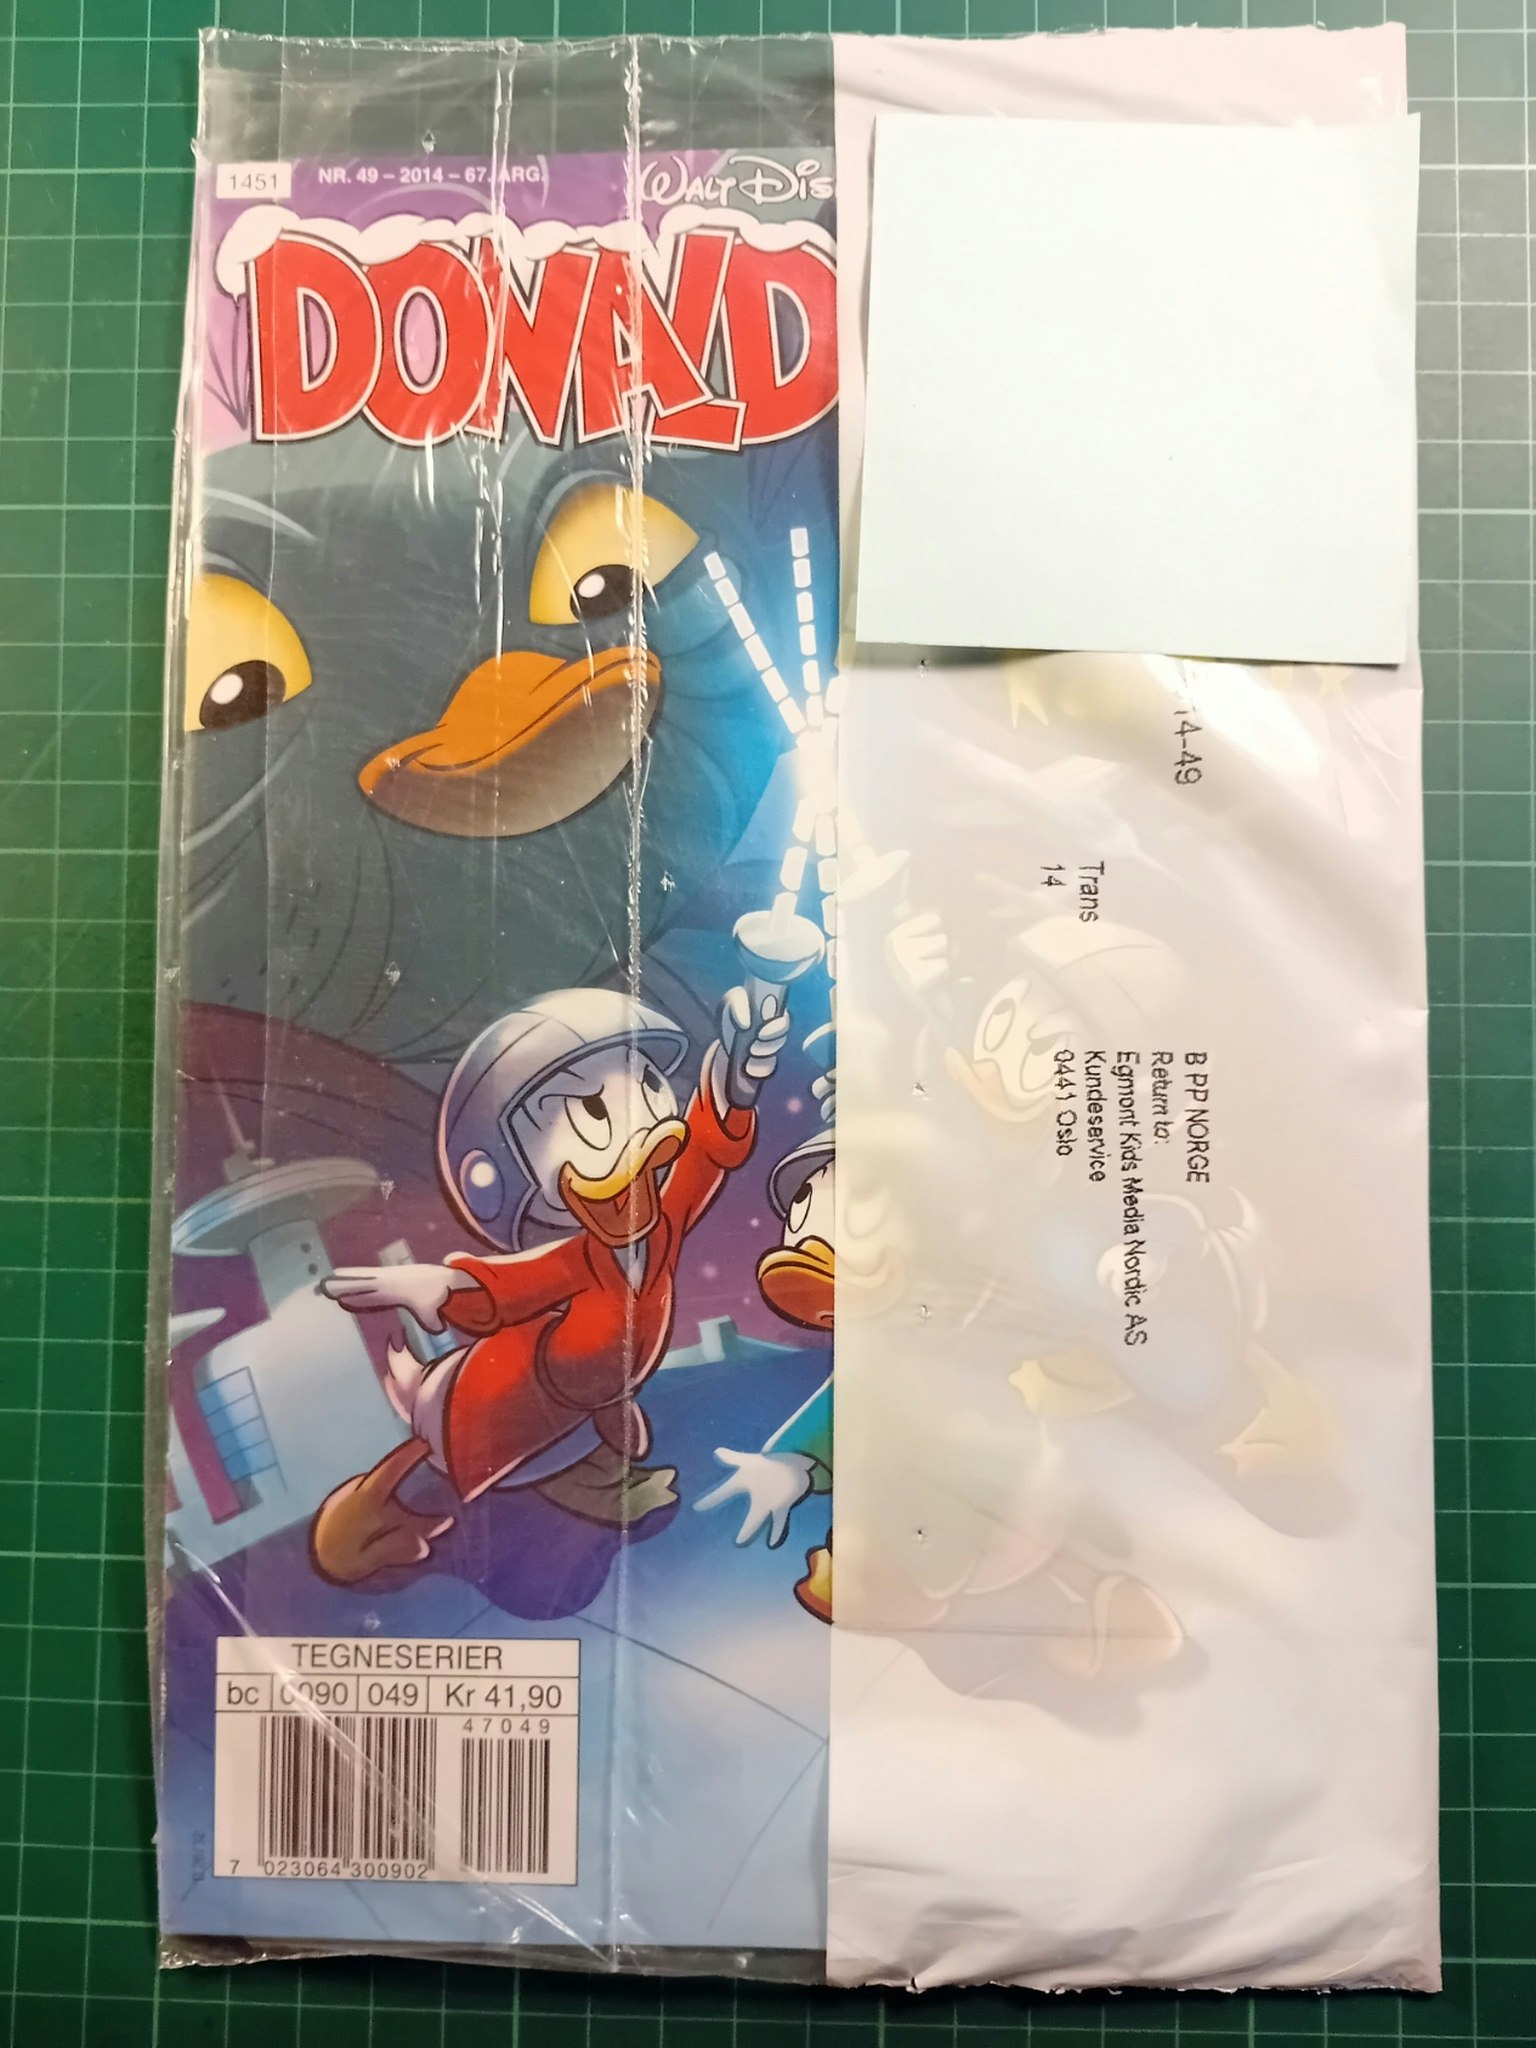 Donald Duck & Co 2014 - 49 Forseglet